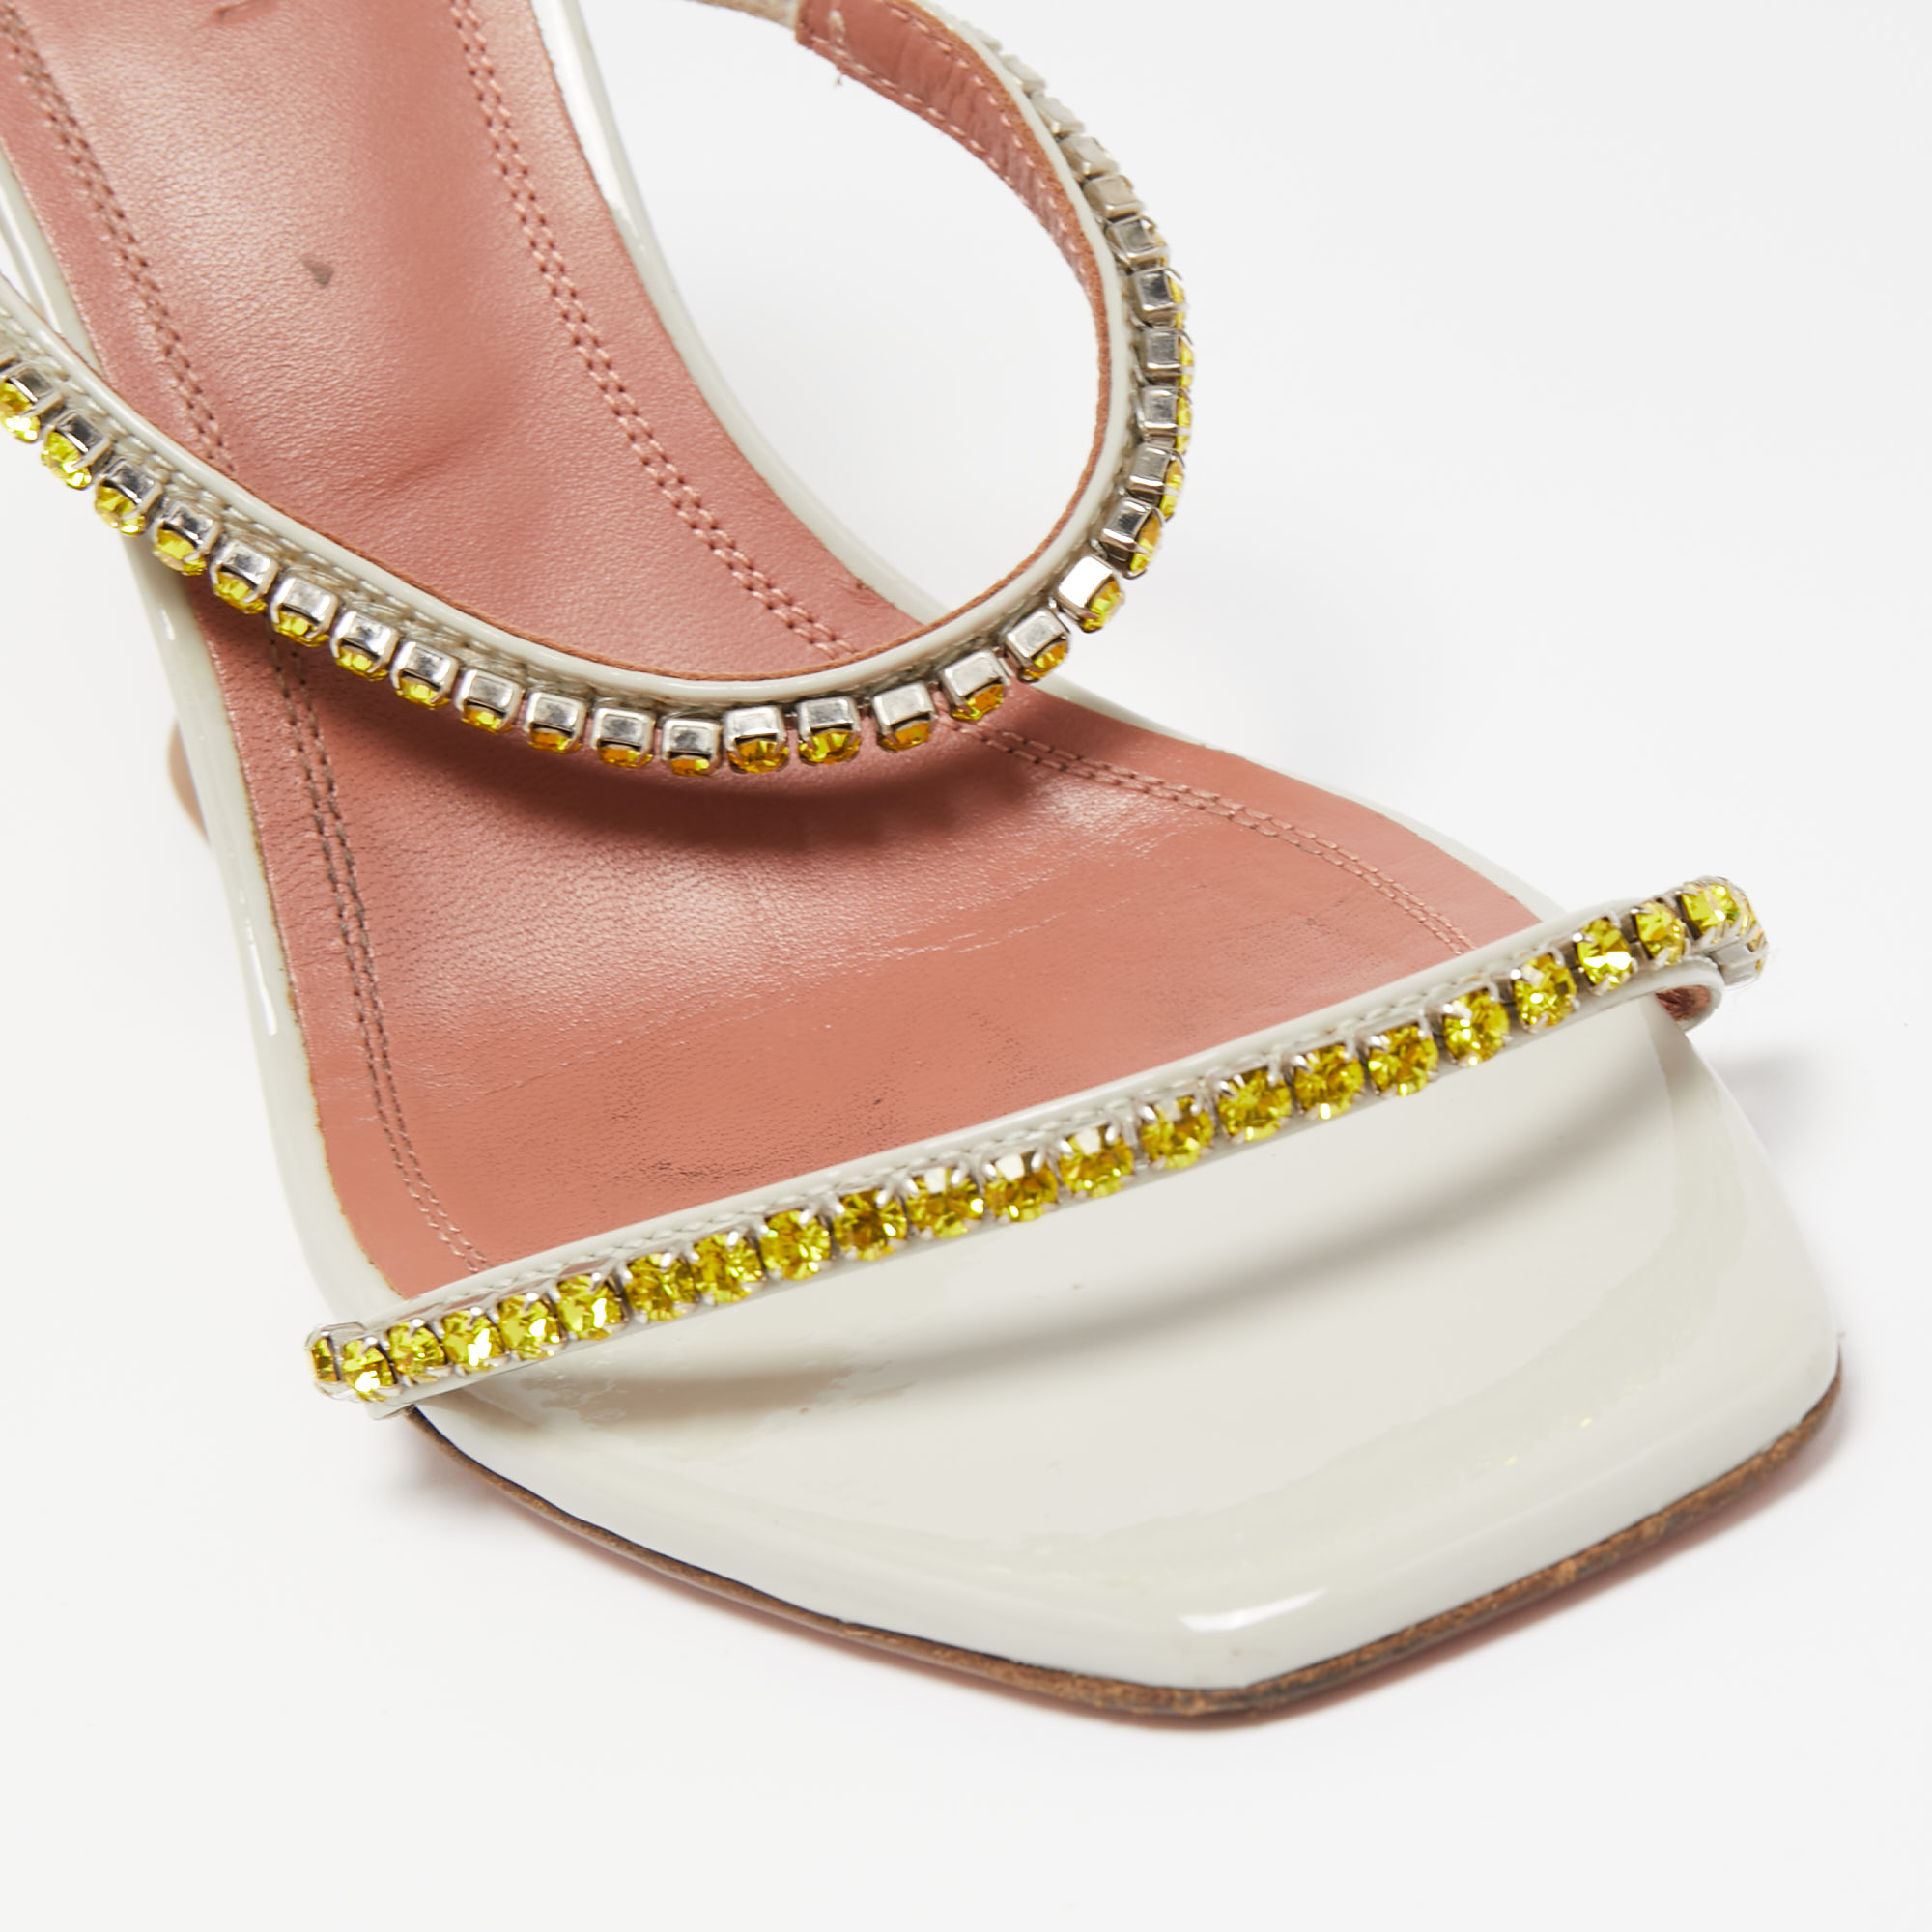 Amina Muaddi Grey Patent Crystal Gilda Sandals Size 38